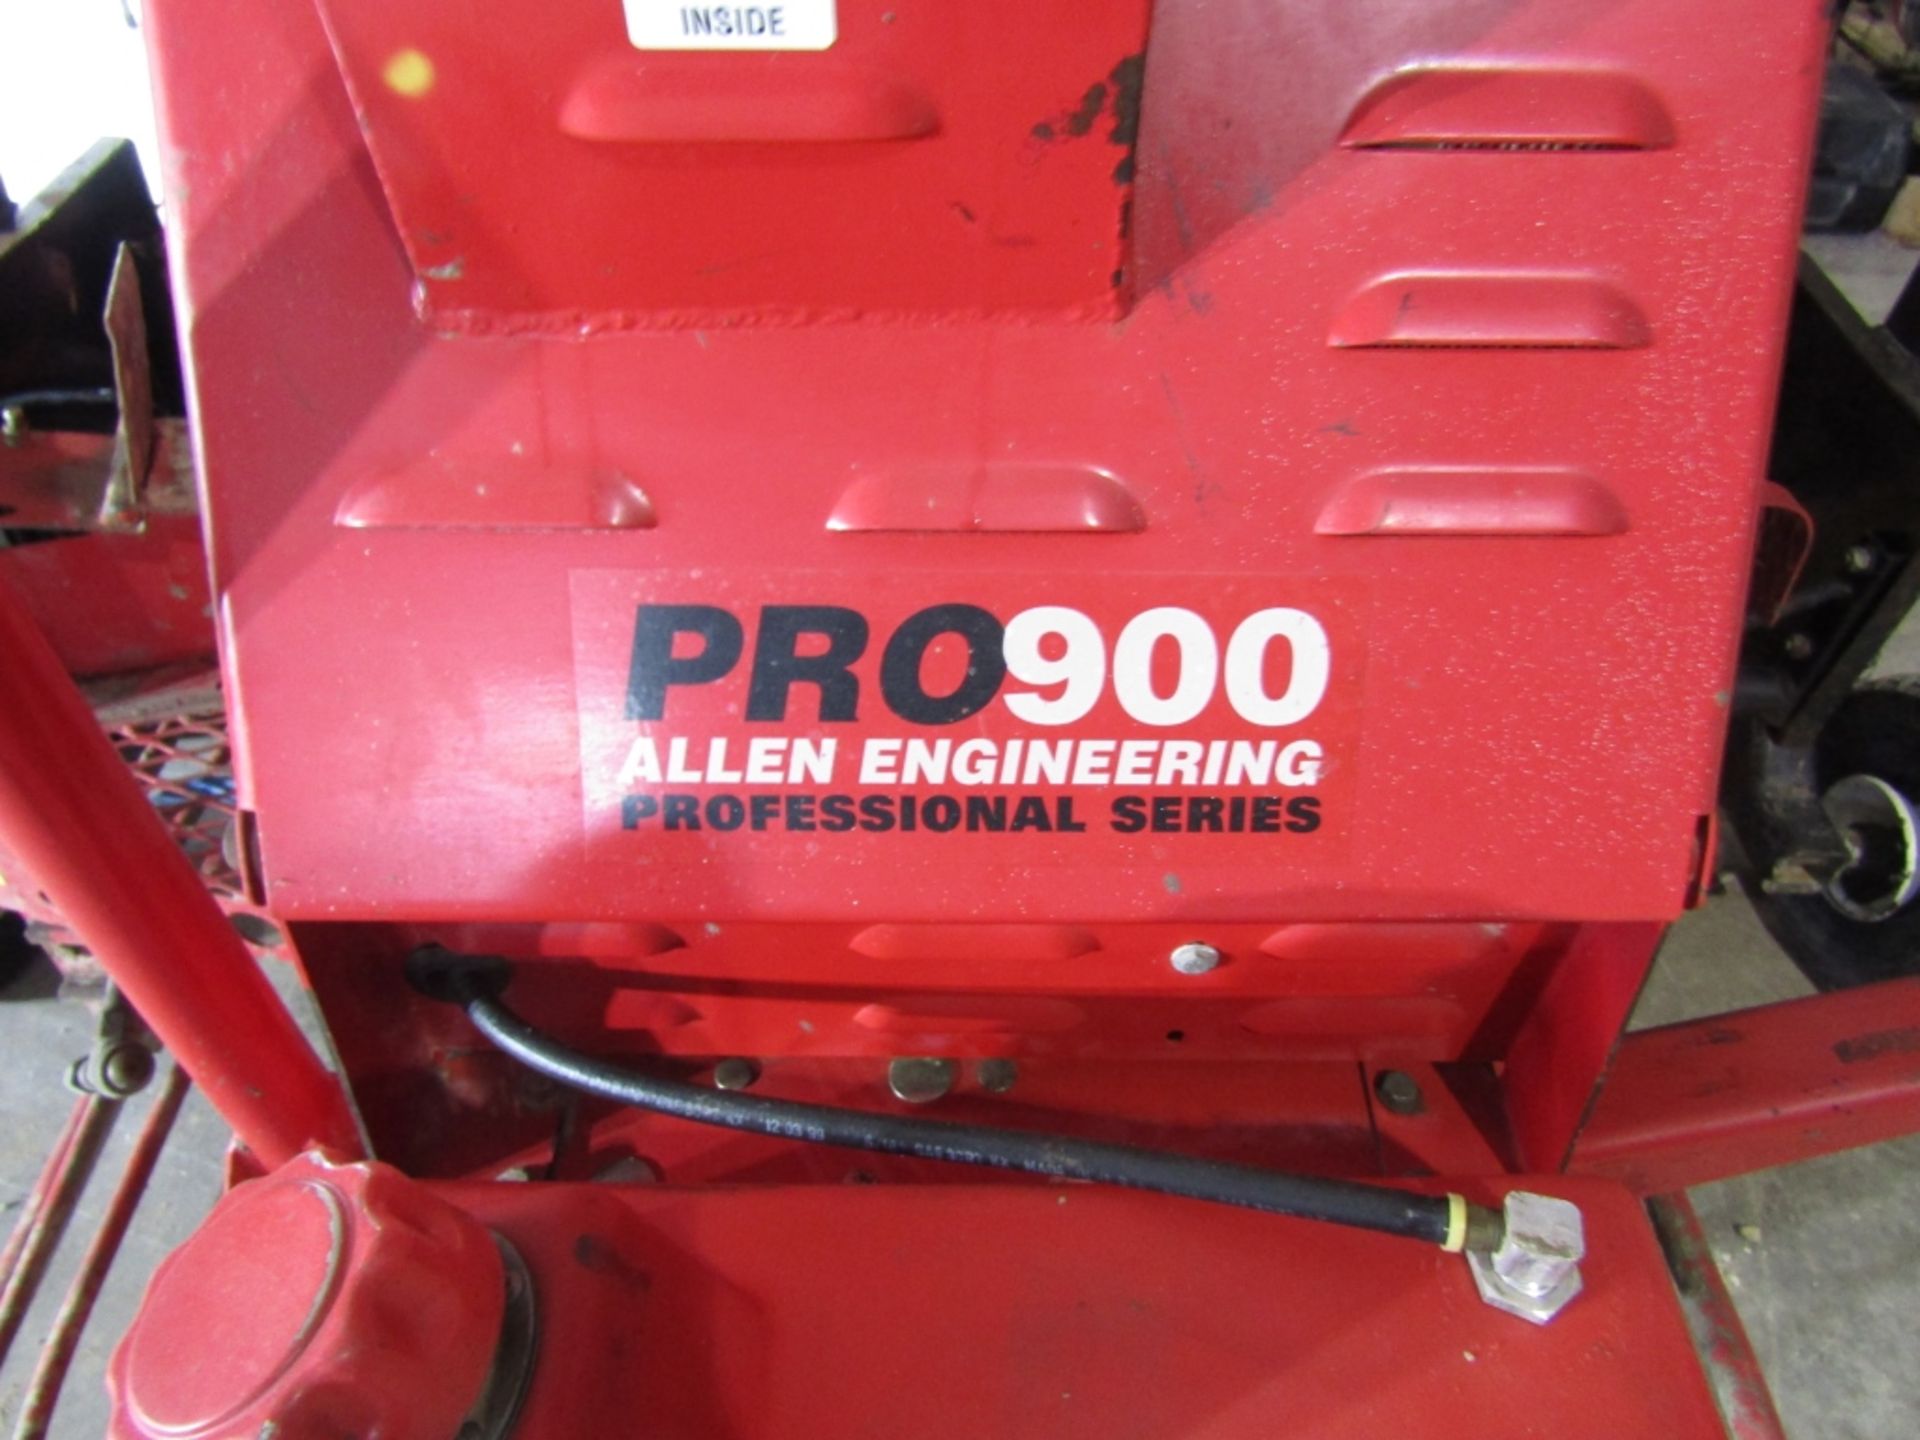 Allen Pro 900 Professional Ride On Trowel, Kawasaki FD620D 20.0 Motor, Located in Hopkinton, IA - Image 2 of 8